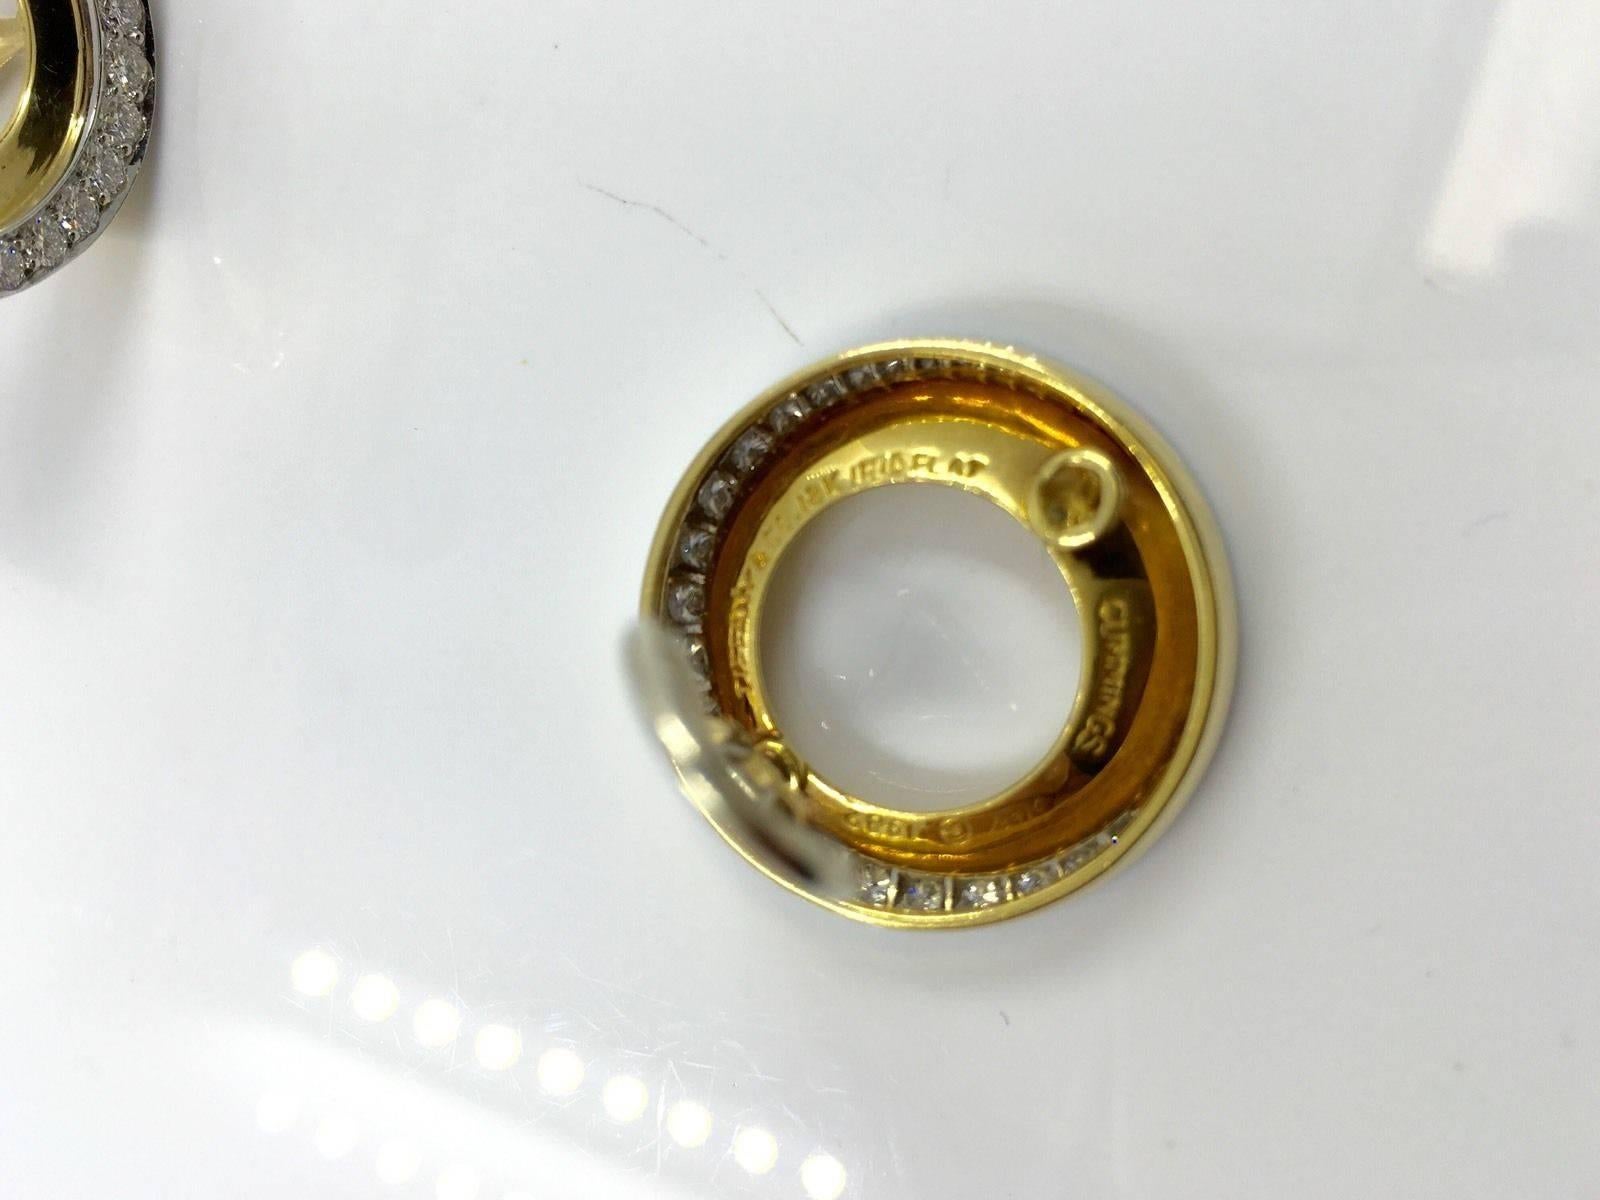 
Metal Type: platinum 18K Yellow Gold
Hallmark: 750
Signature: tiffany&co cummings 
Metal Finish: High Polish
Total Item Weight (g): 19 gram
Estimated Retail: 
Condition: Excellent. 
Measurements: 